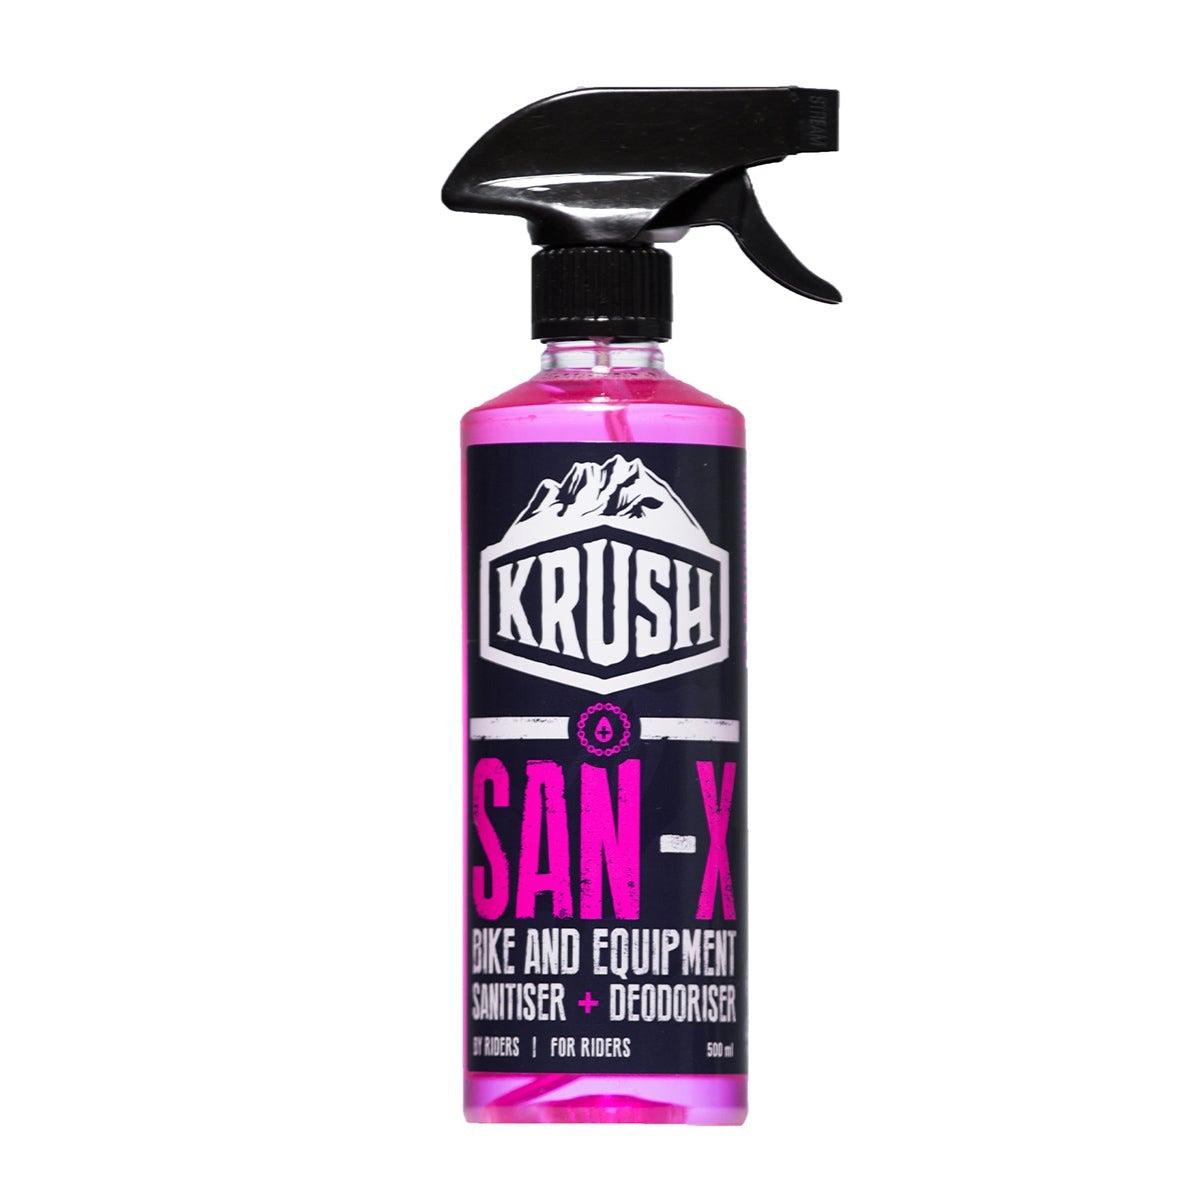 Krush San-X Sanitiser + Deodoriser